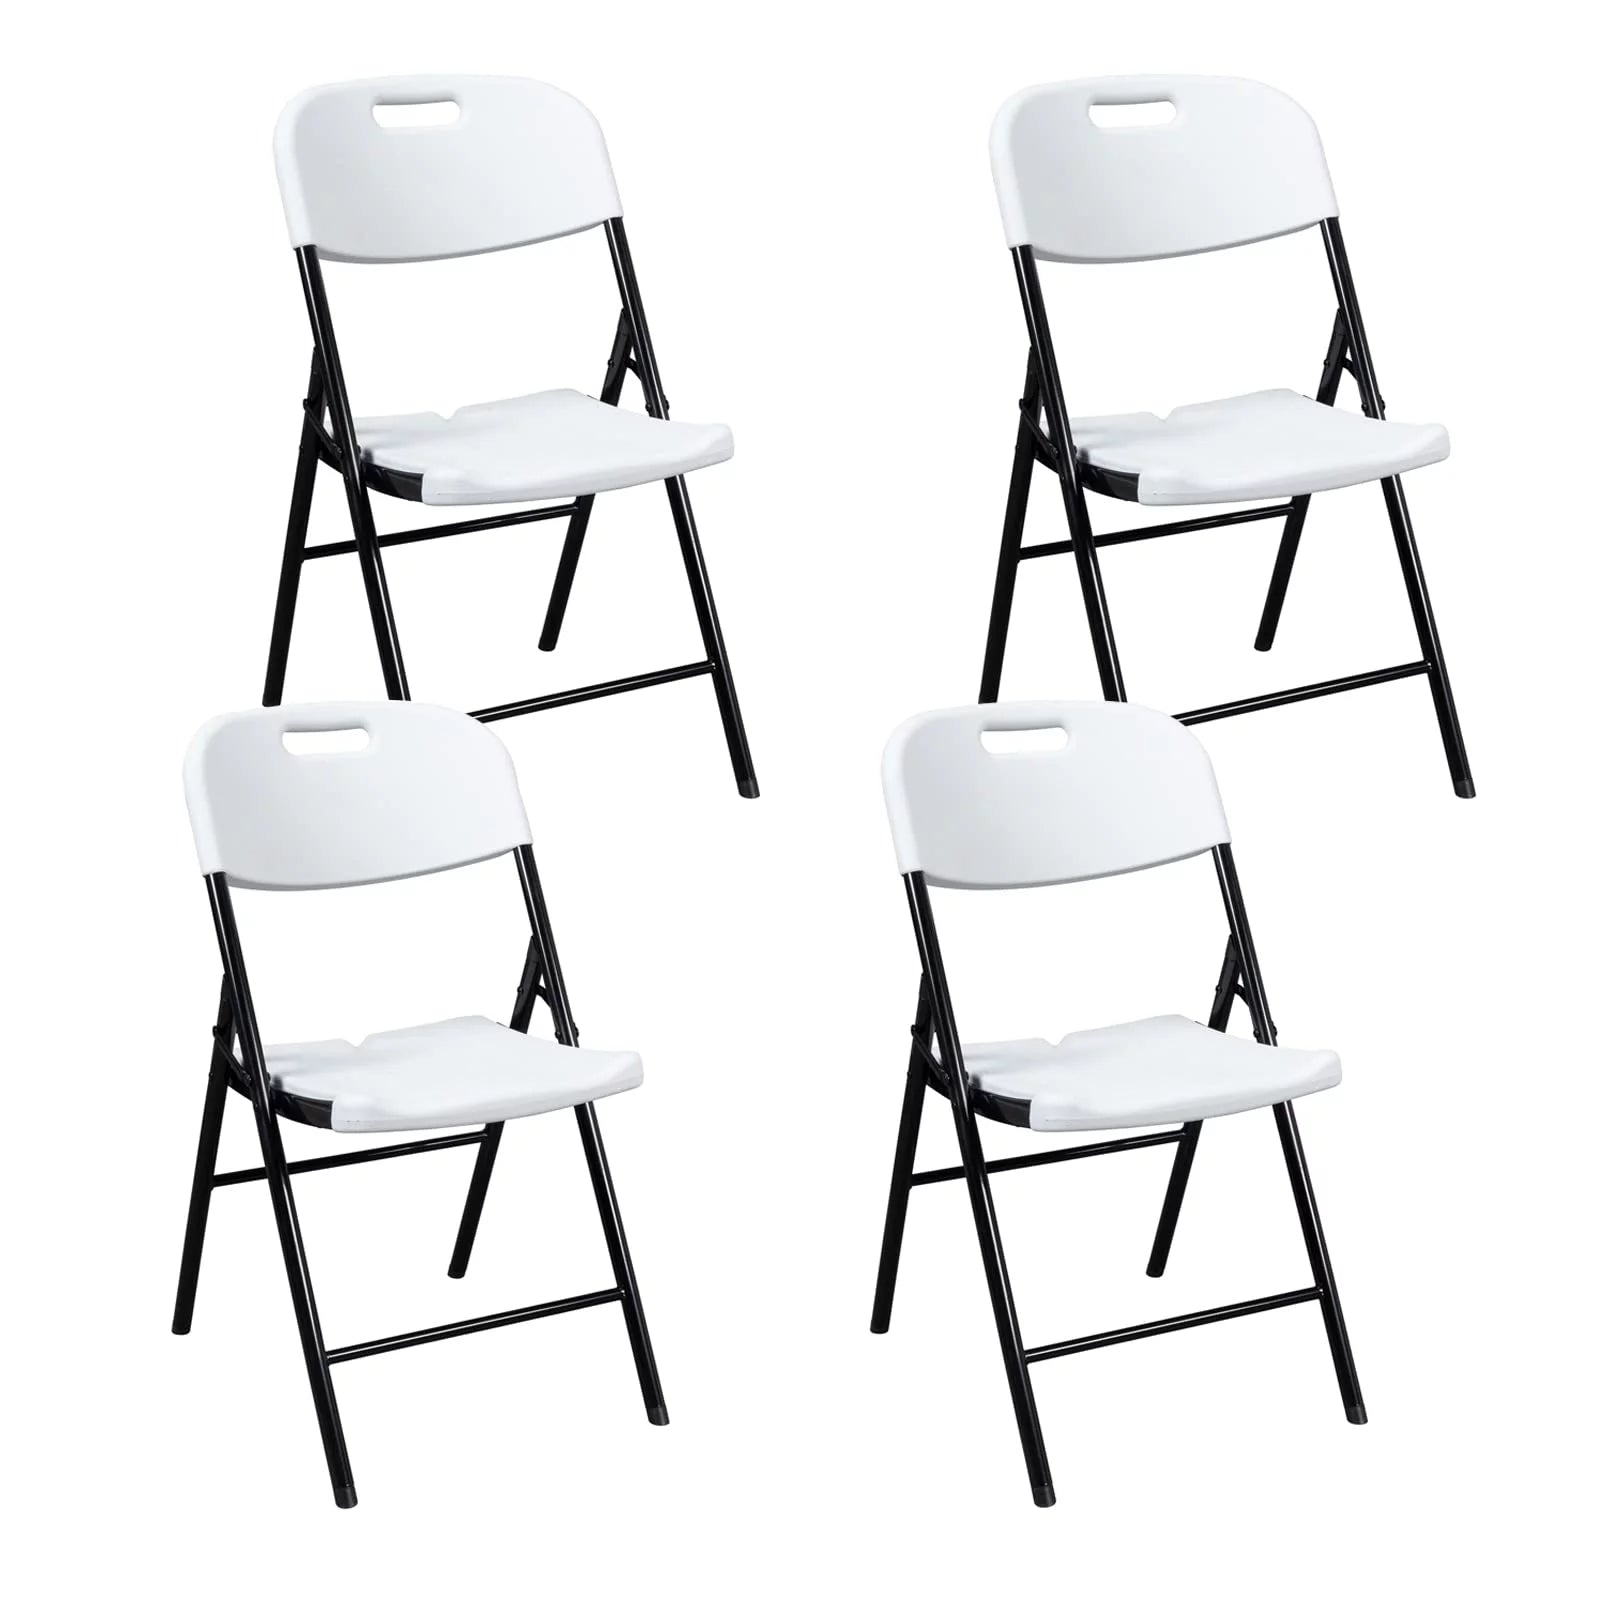 4 Portable Plastic Folding Chairs